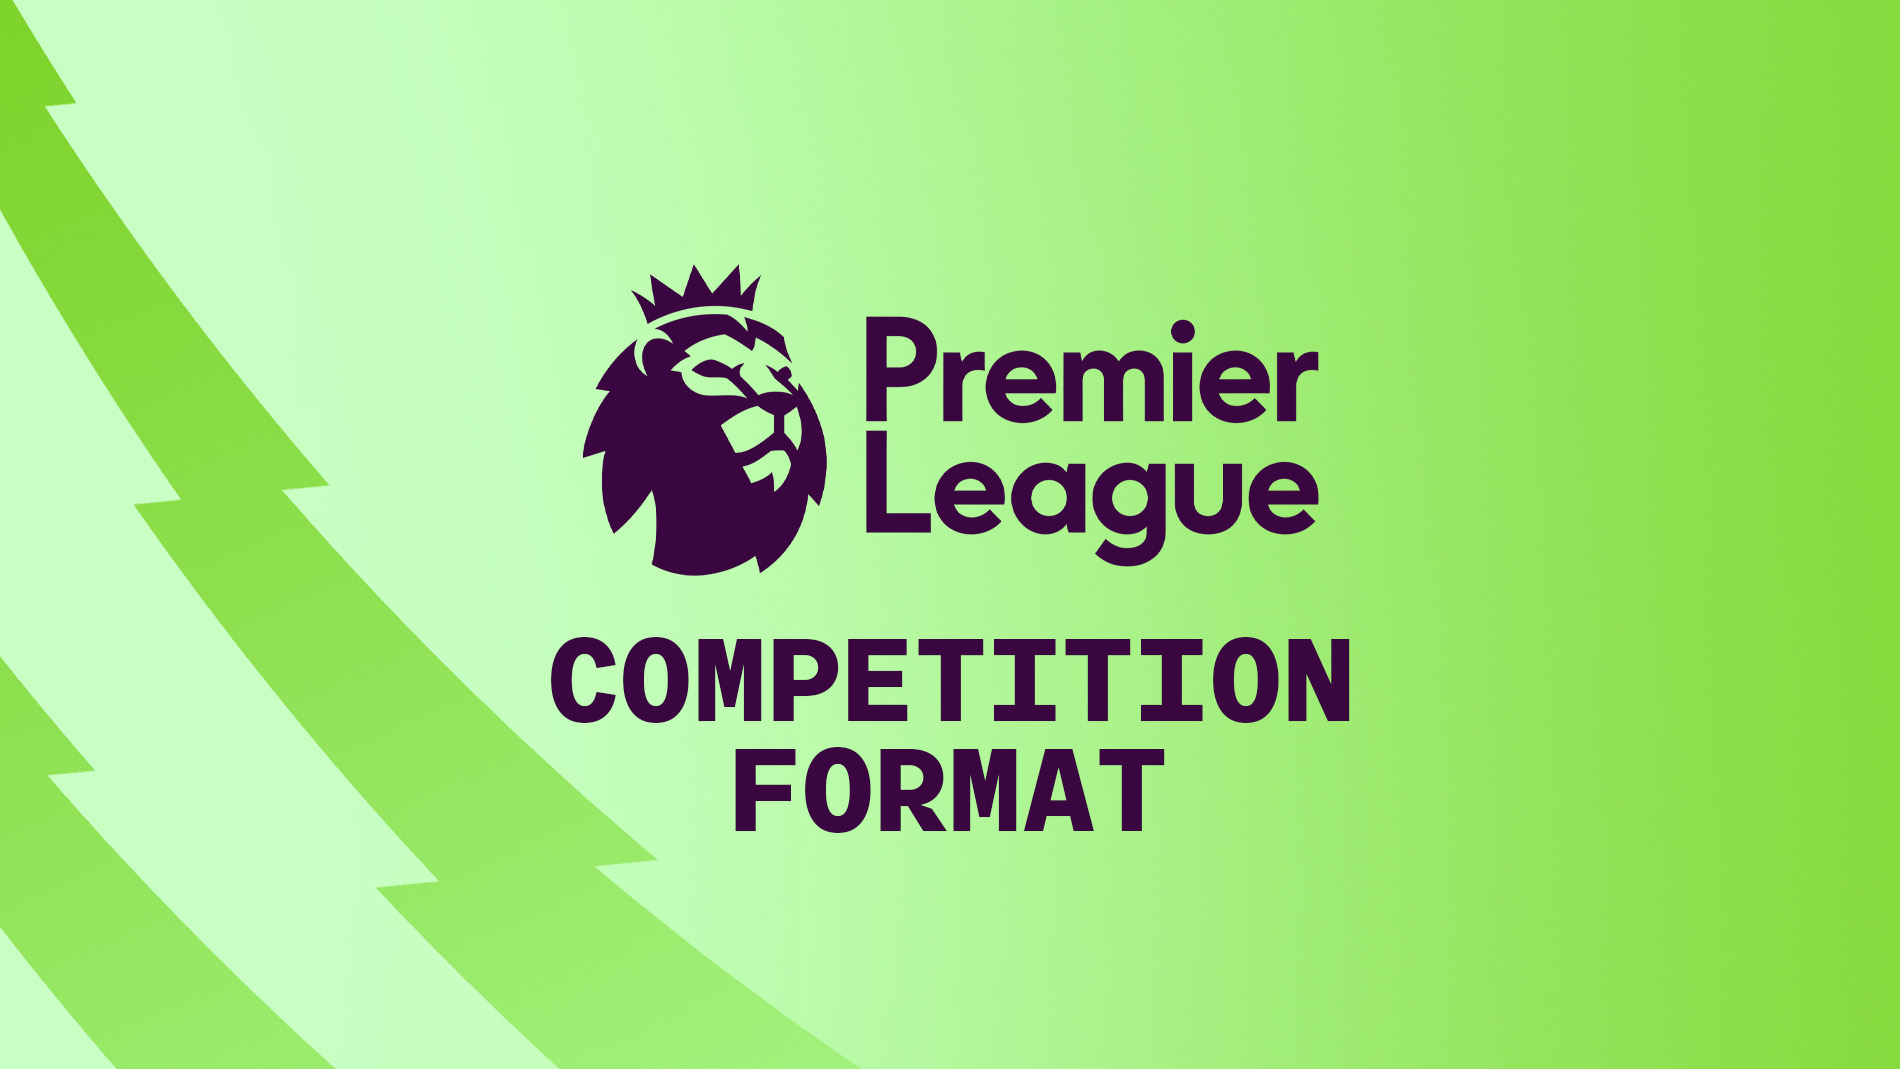 Premier League – Competition Format and Structure